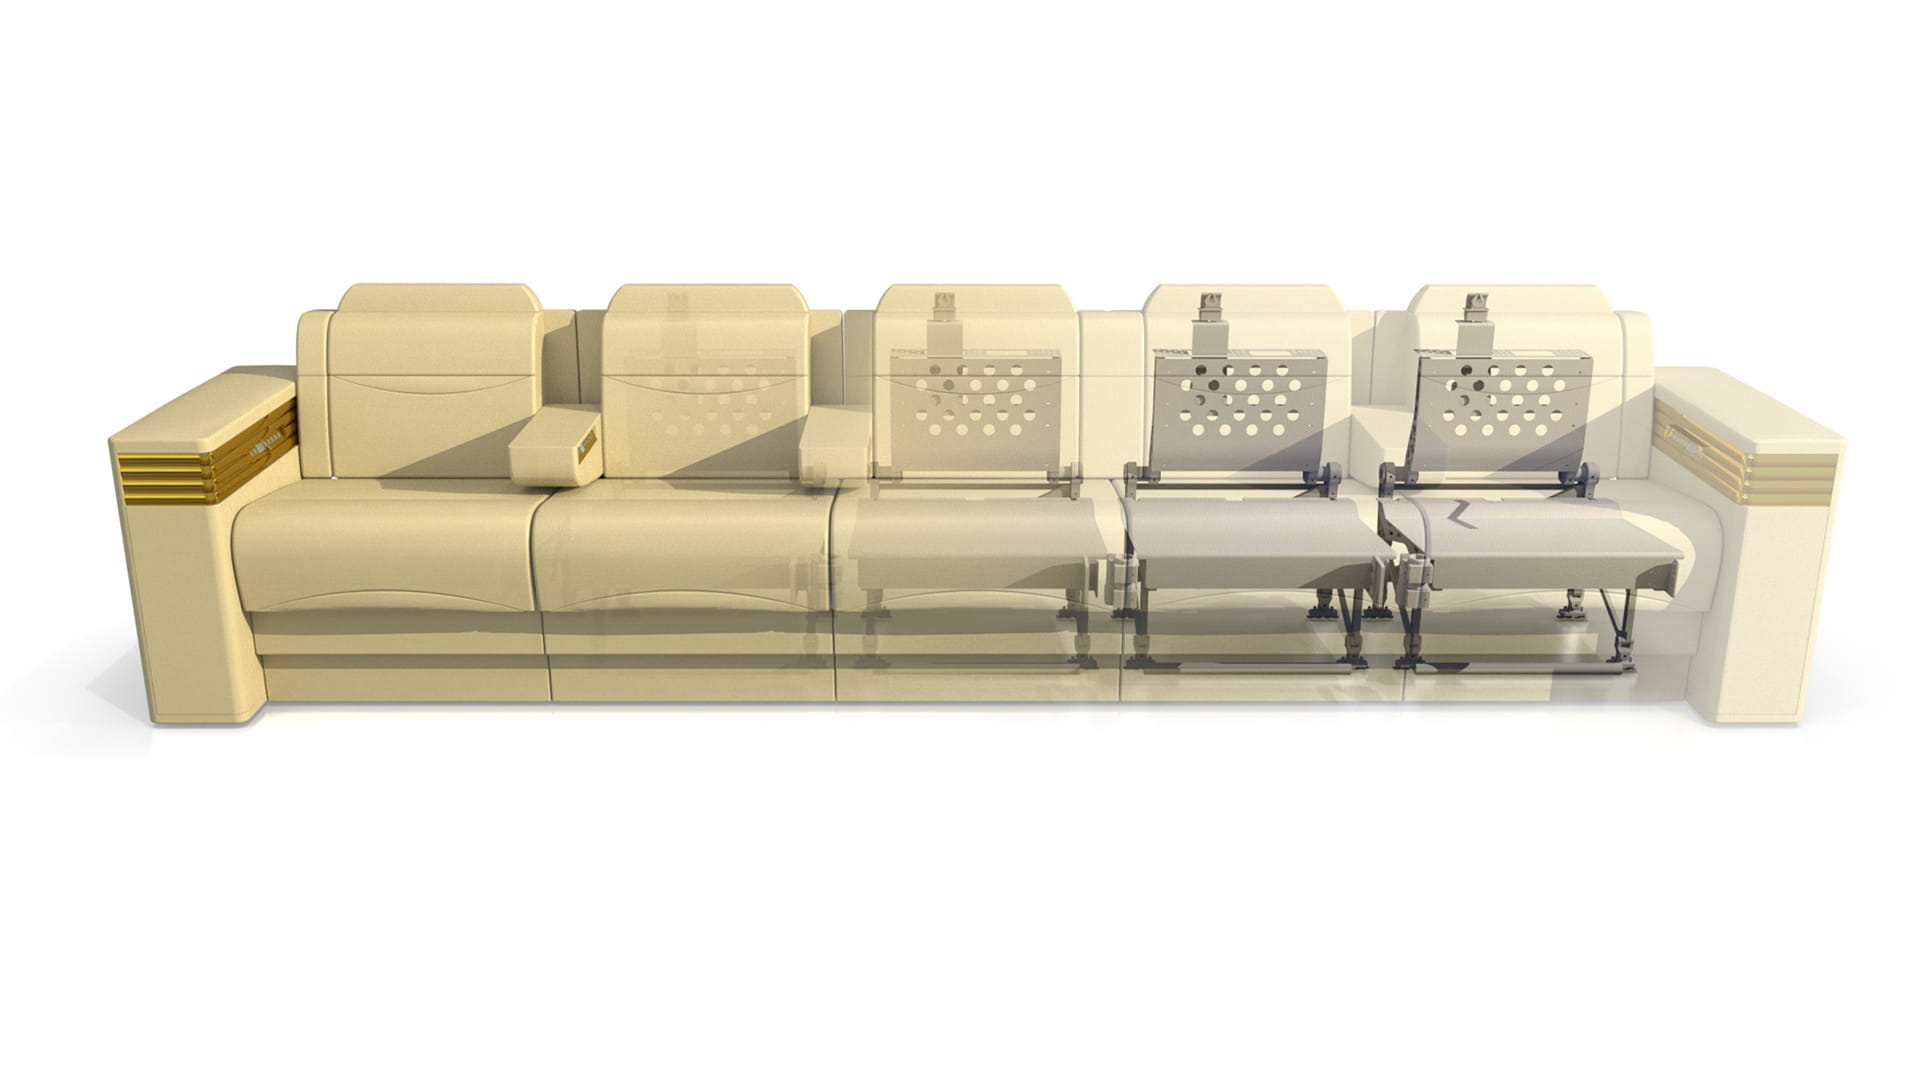 3D render of aircraft seats